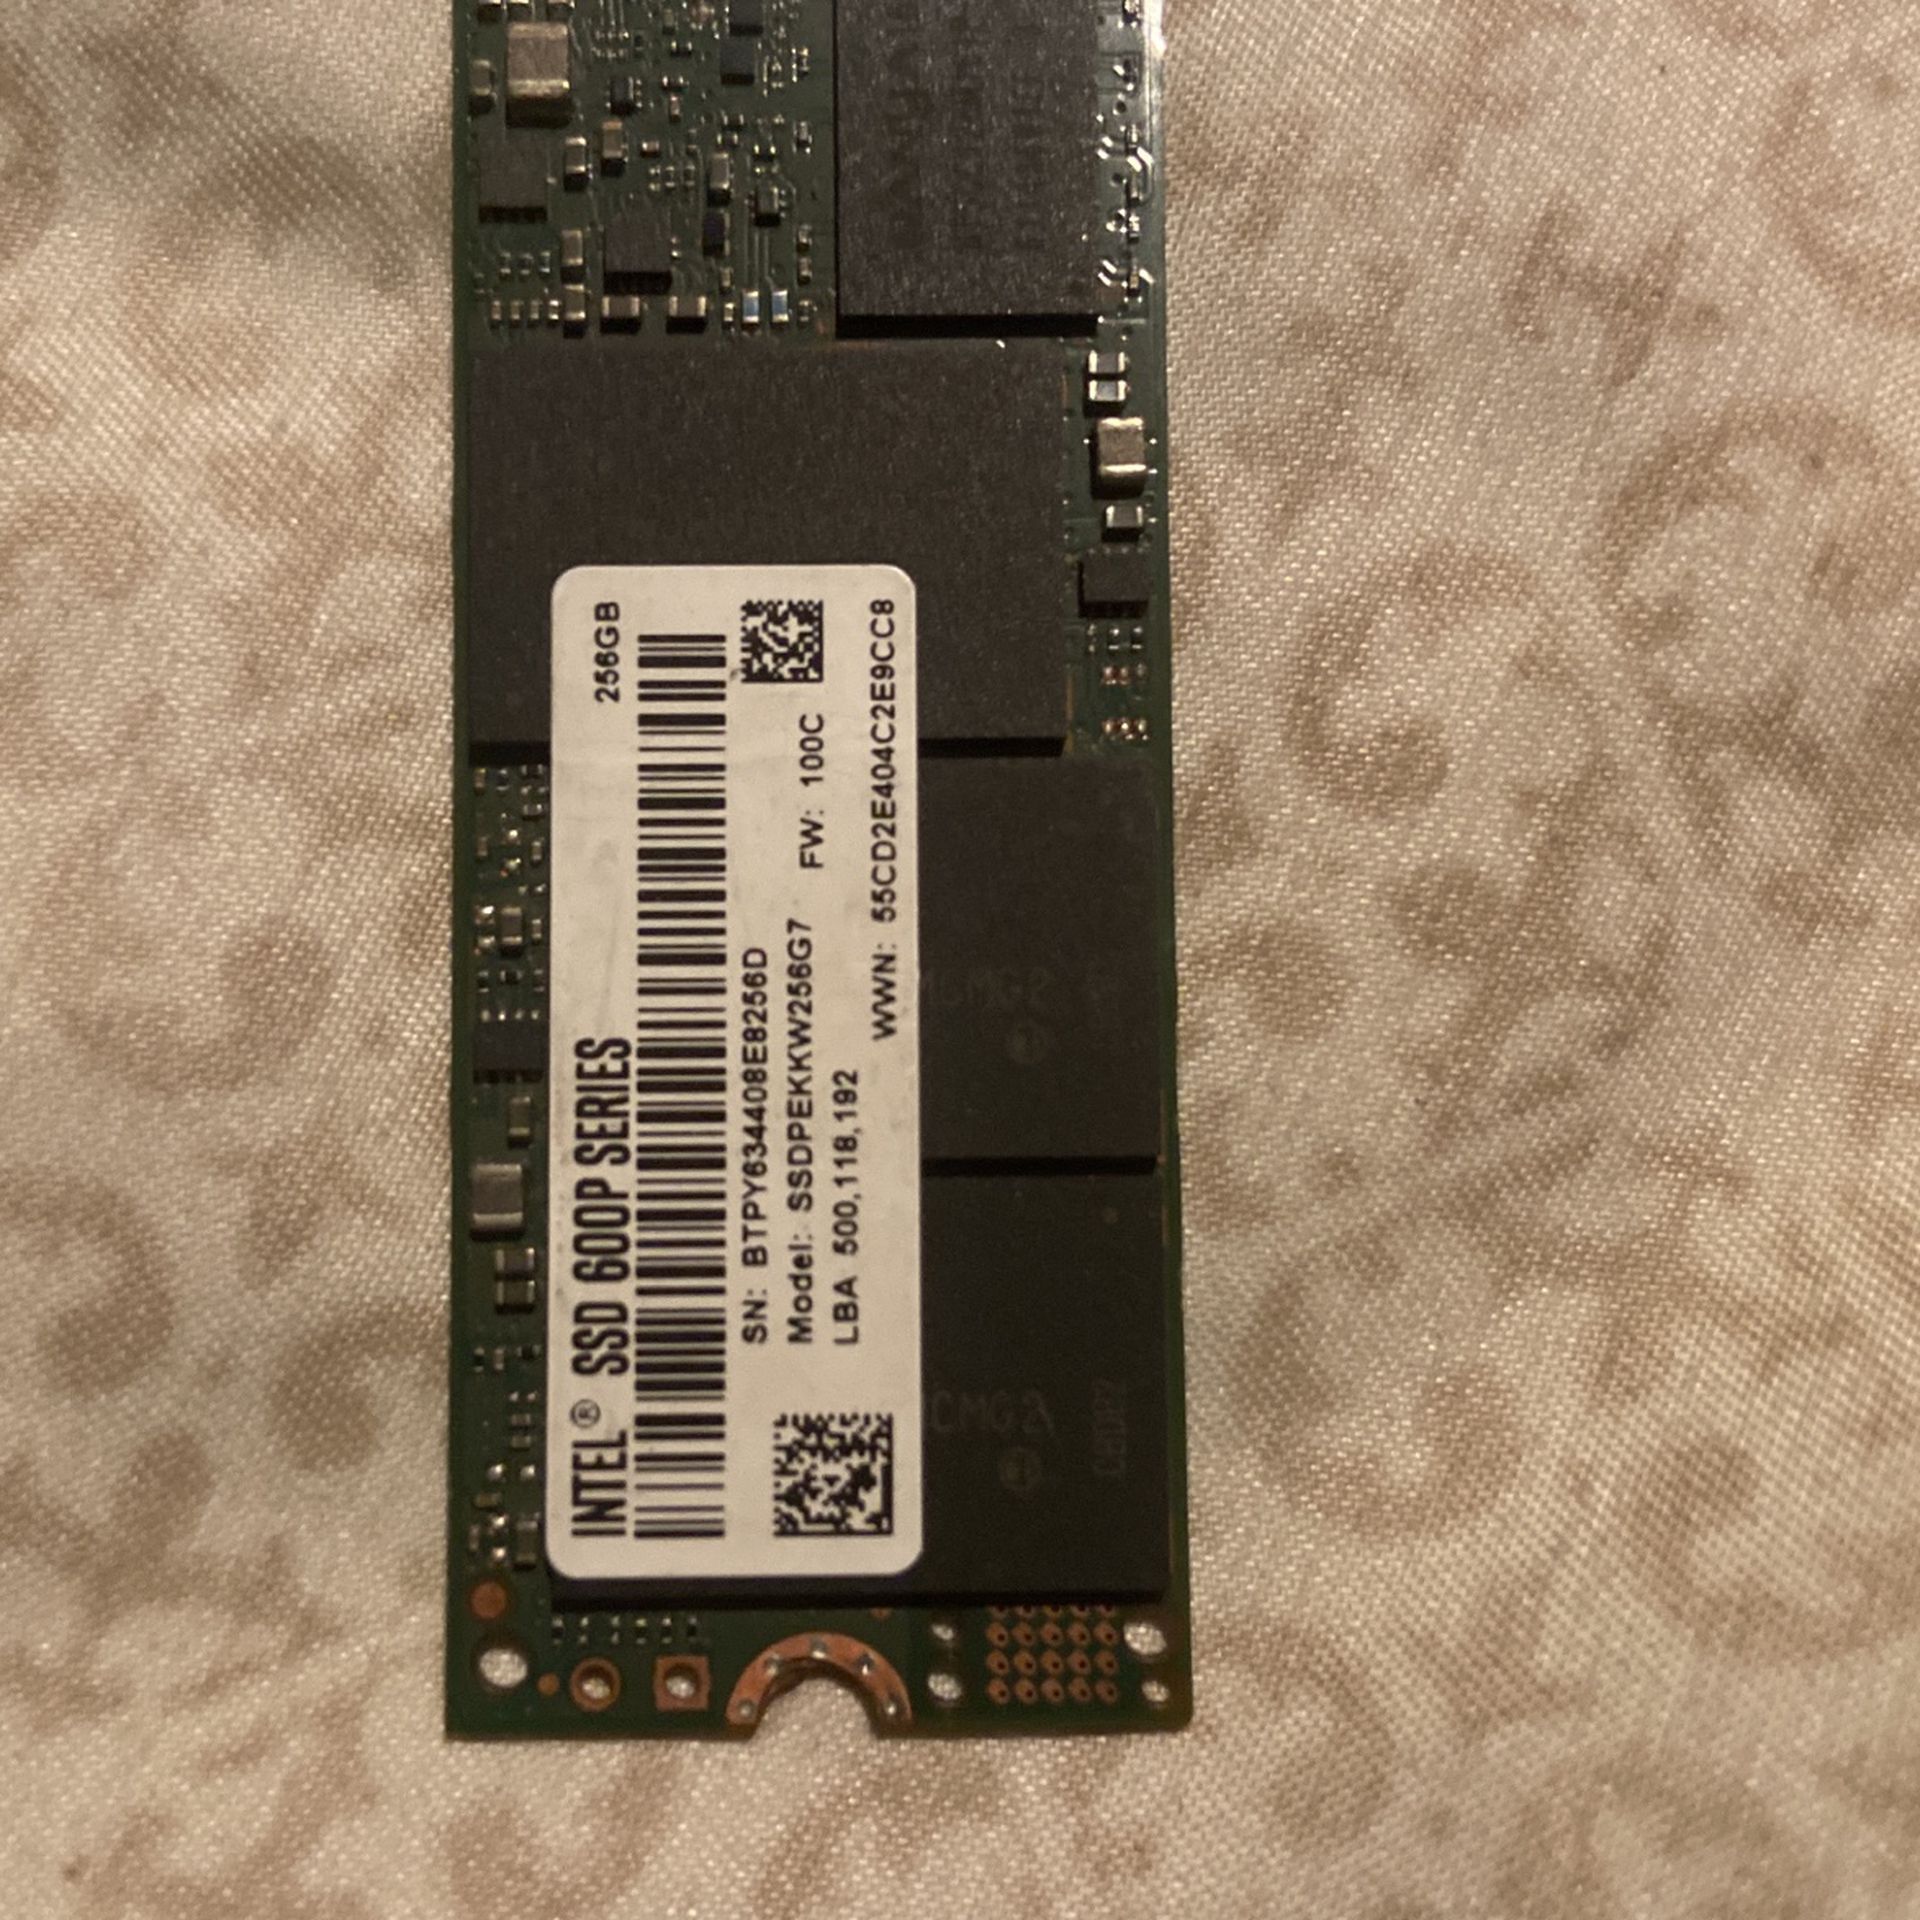 Knurre Børnecenter Alert Intel SSD 600p Series (256GB, M.2) for Sale in San Diego, CA - OfferUp